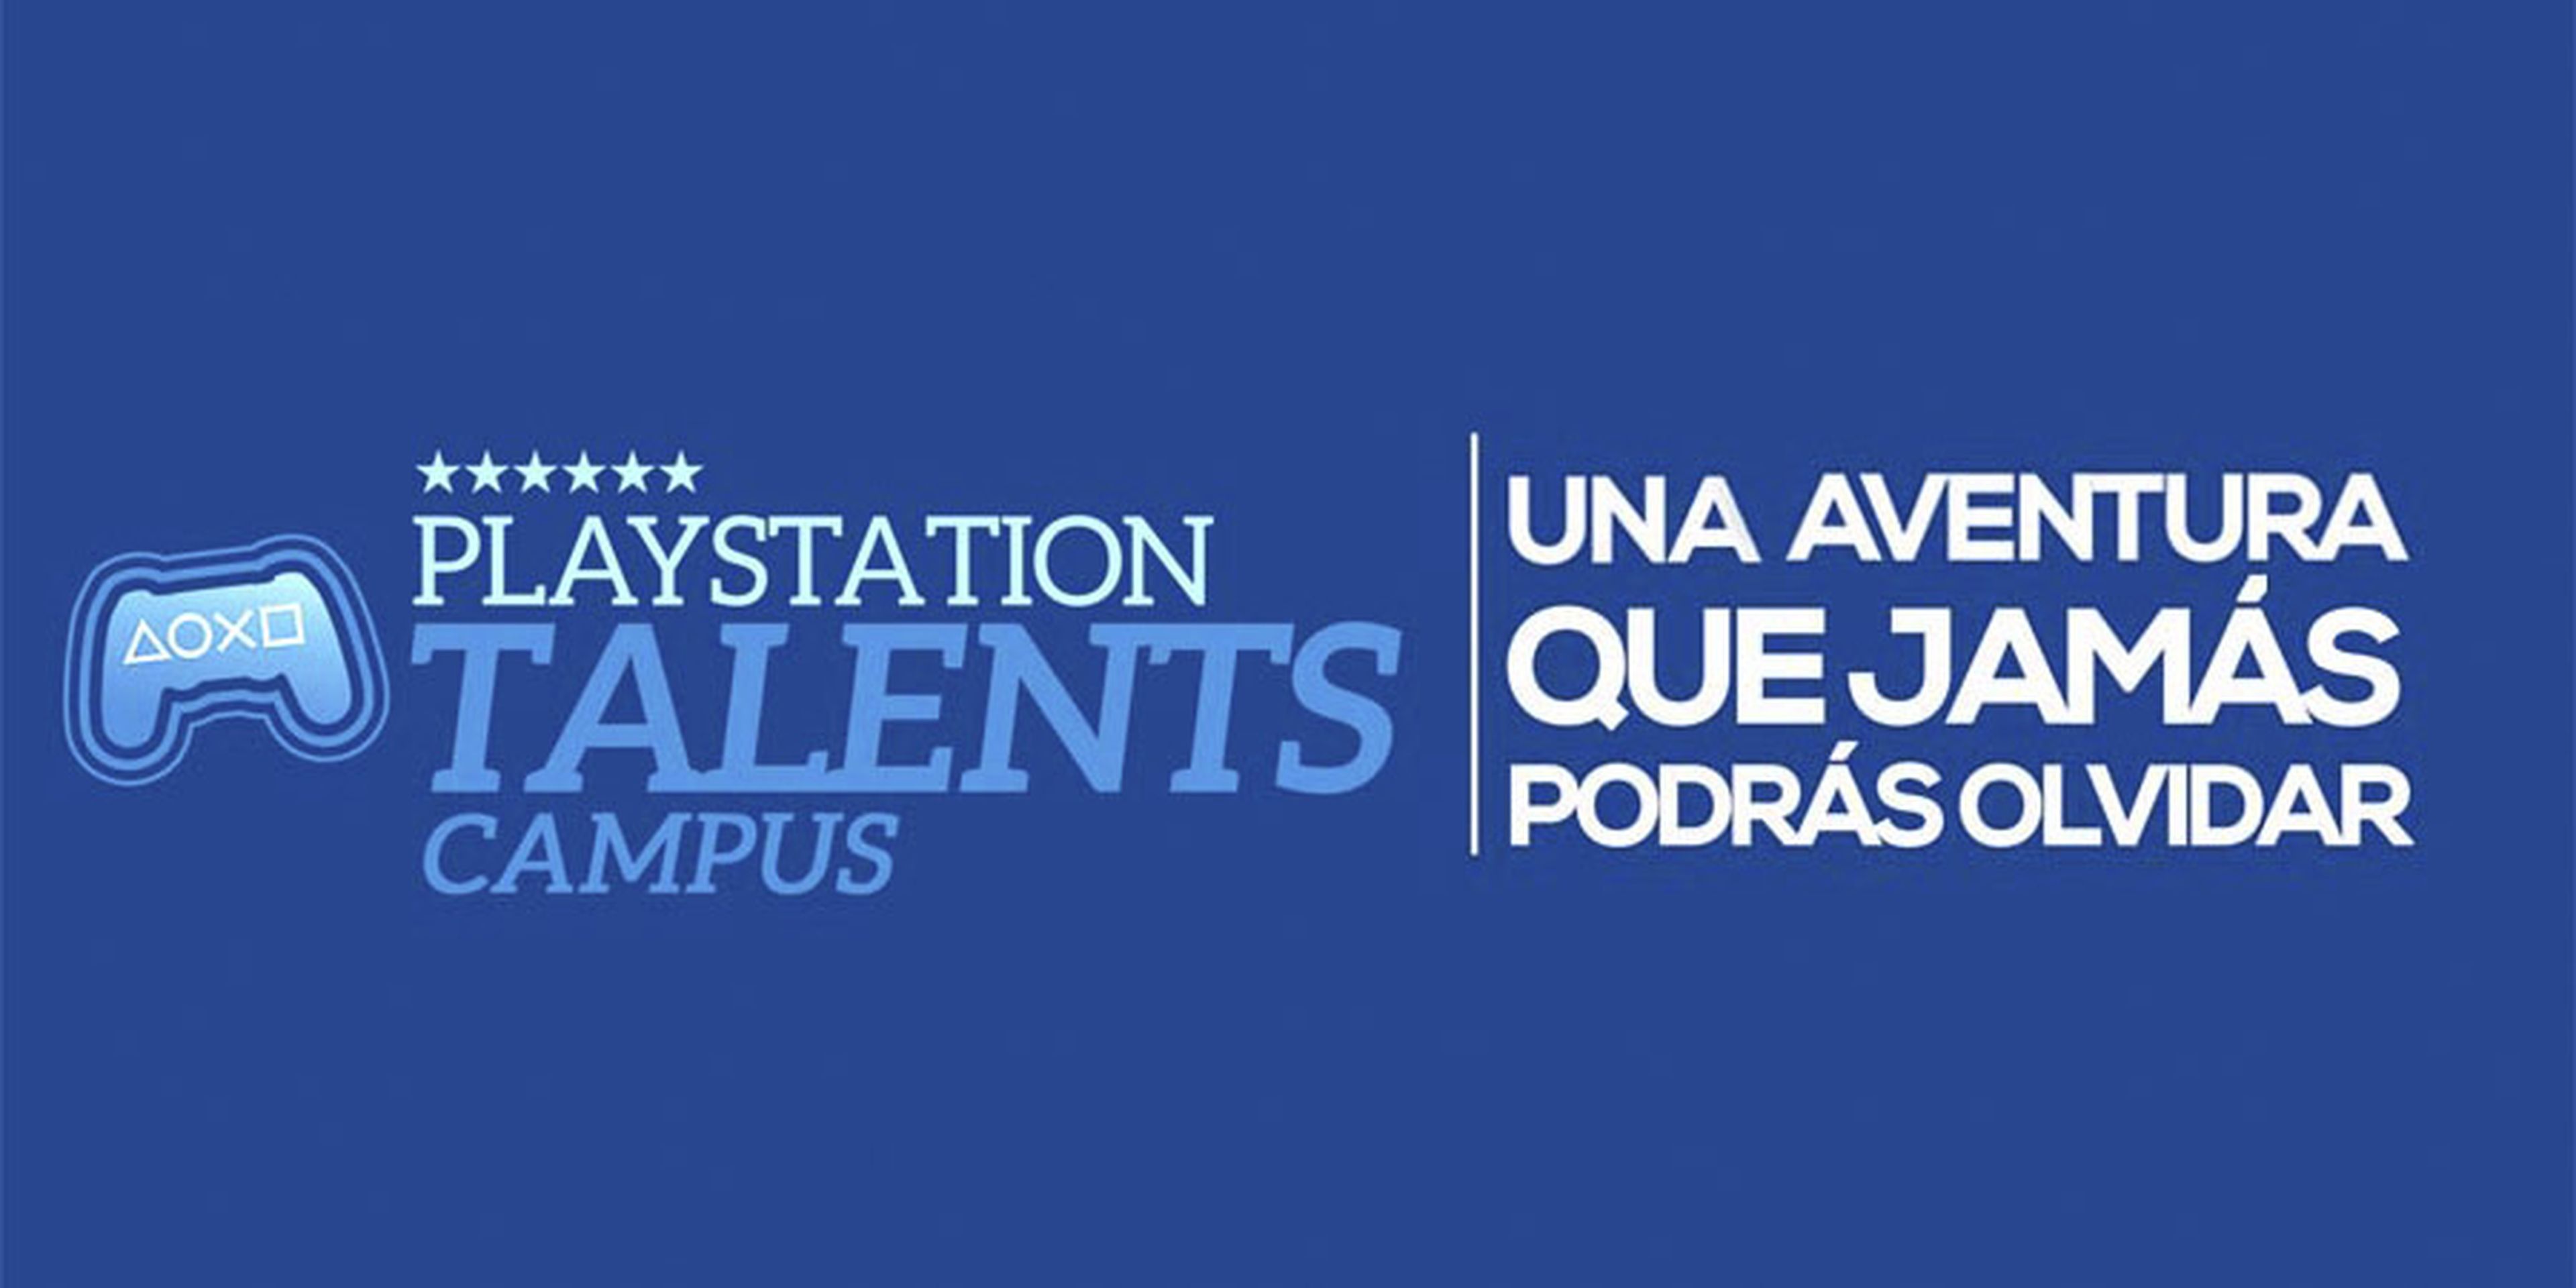 PlayStation Talents Campus